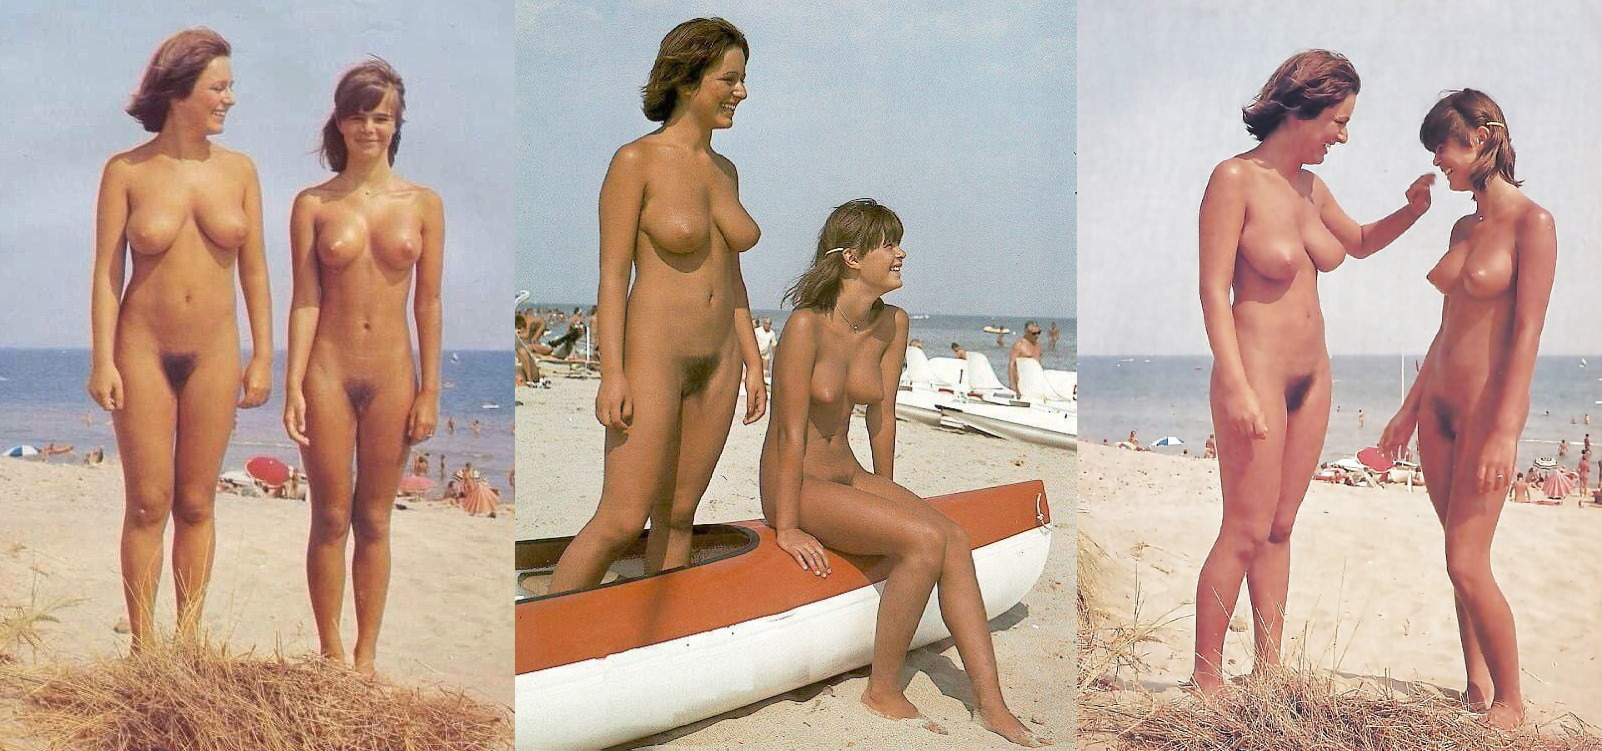 cory chase anal porn video tube #threegirls #beach #outdoornudity #fkk #spreadingherlegs